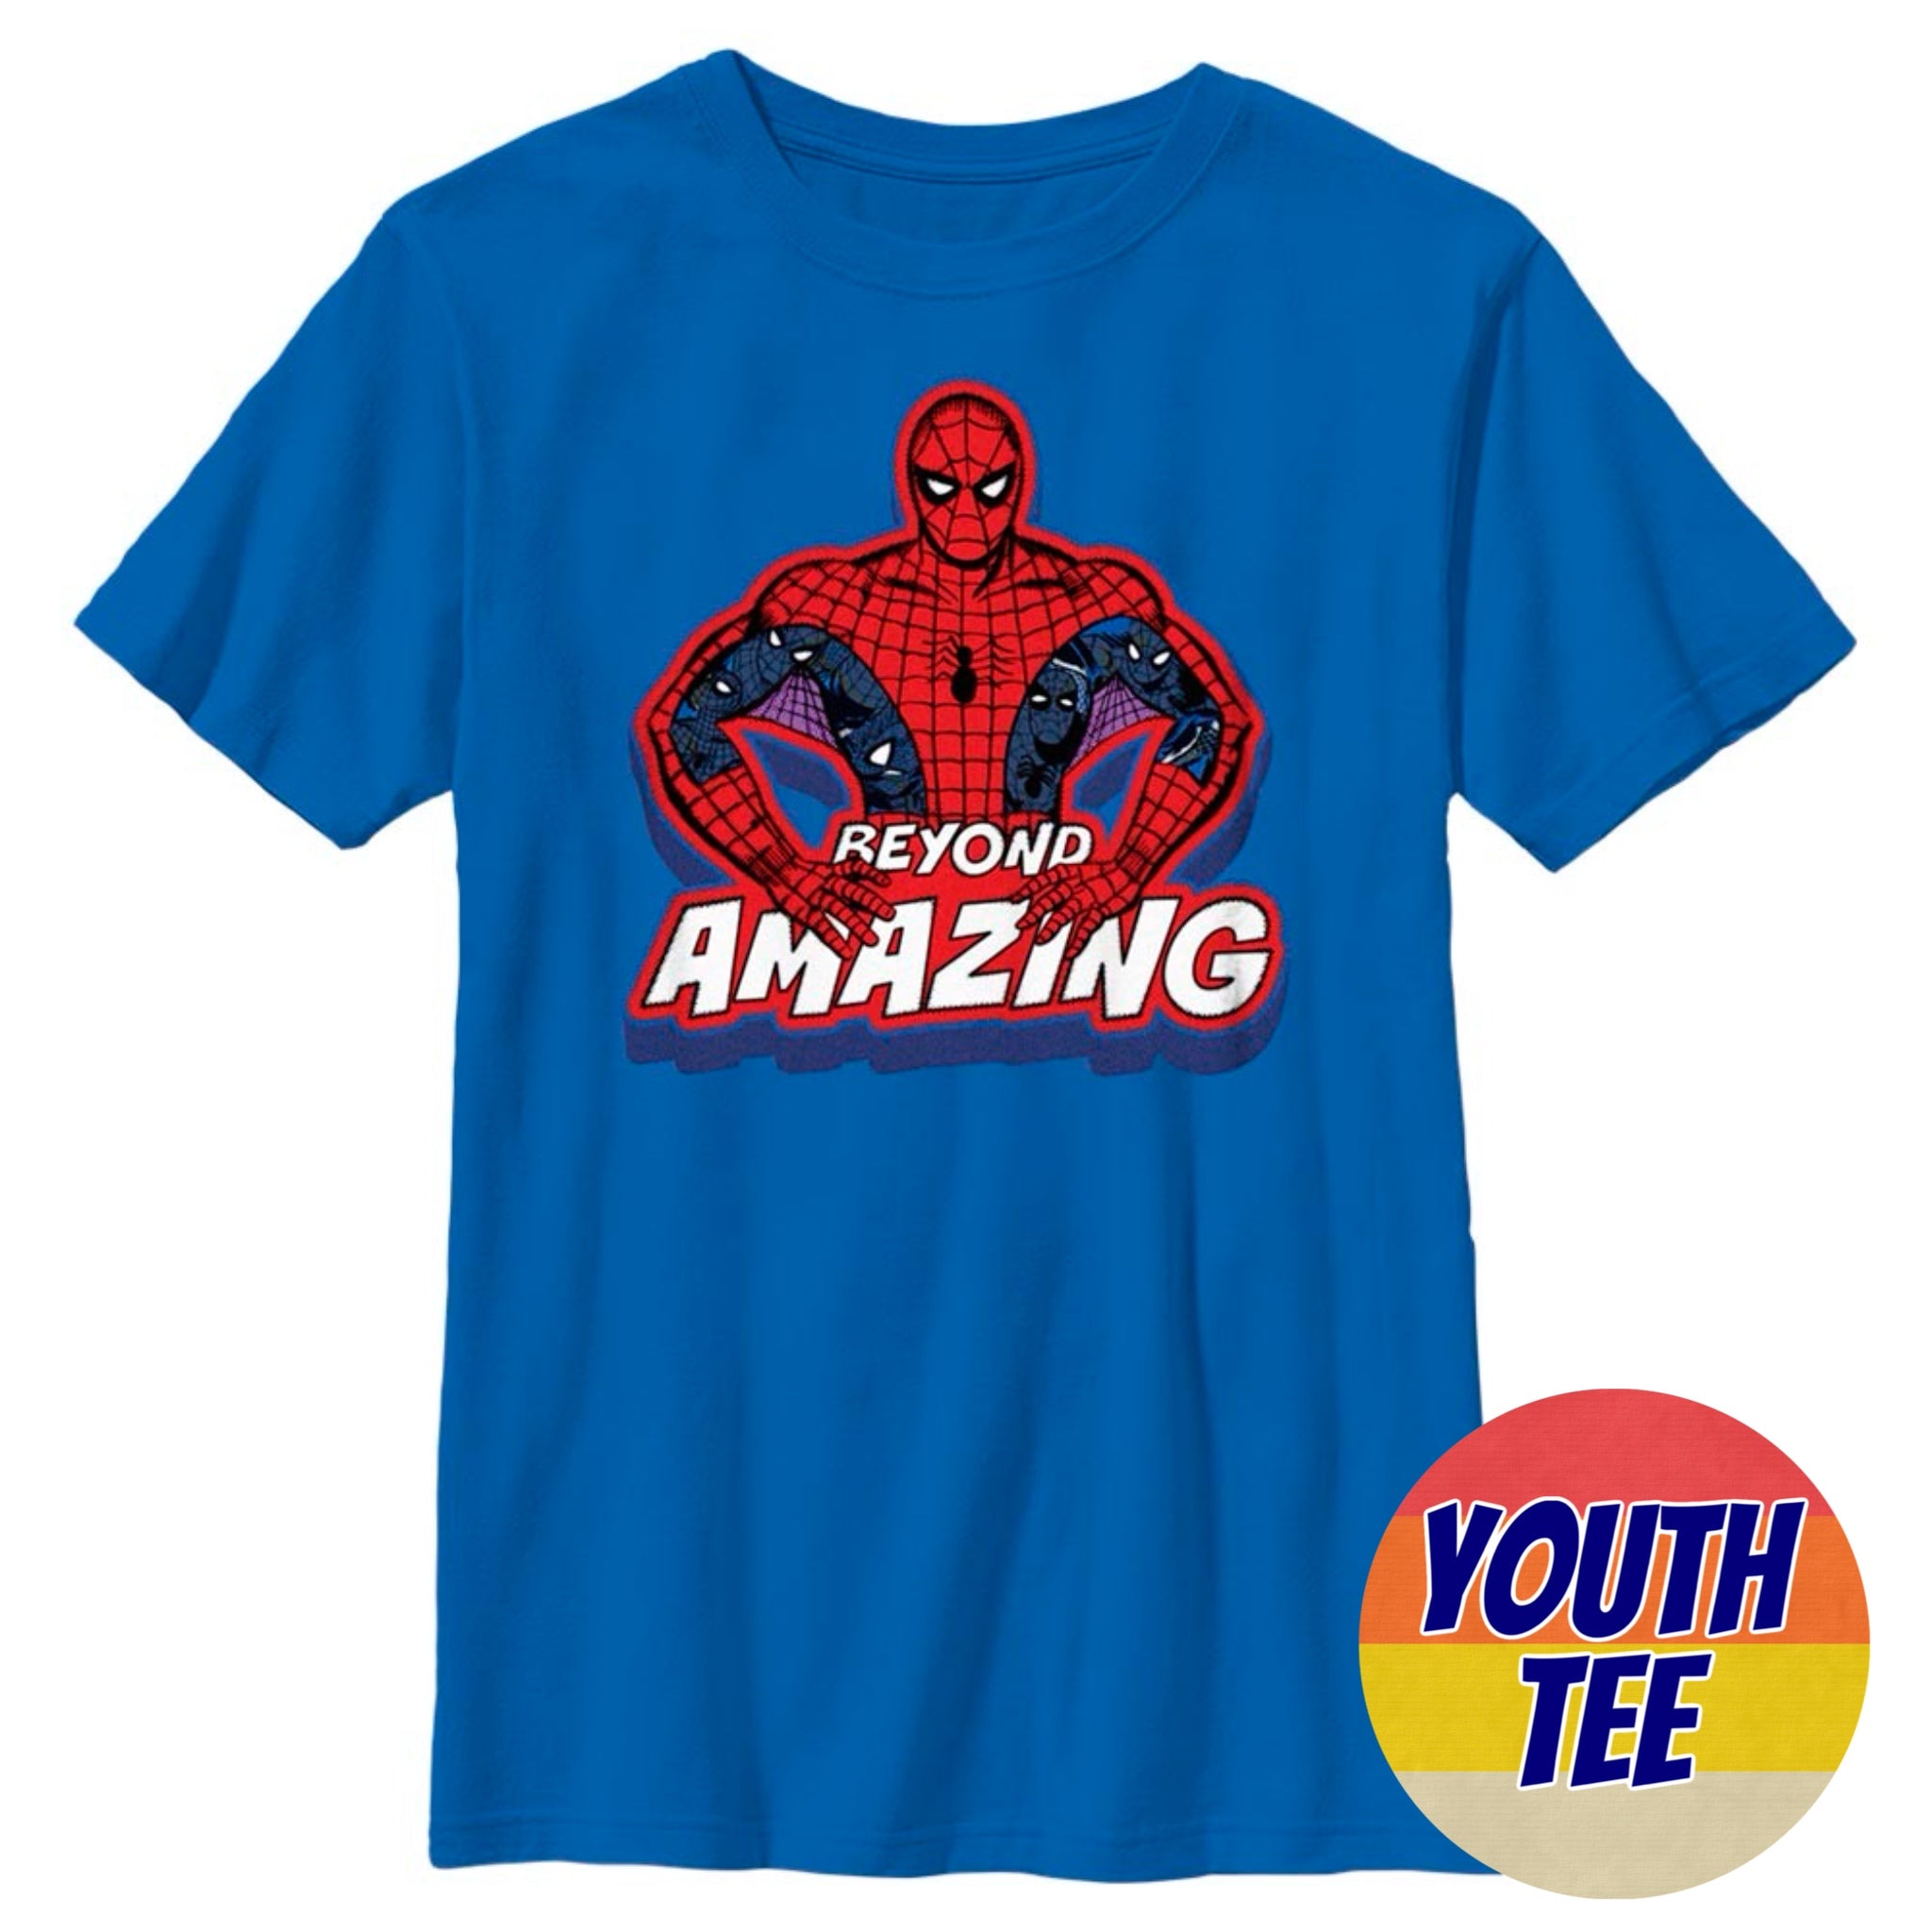 Boy's Marvel Spider-Man Beyond Amazing Spidey Pose Beyond T-Shirt